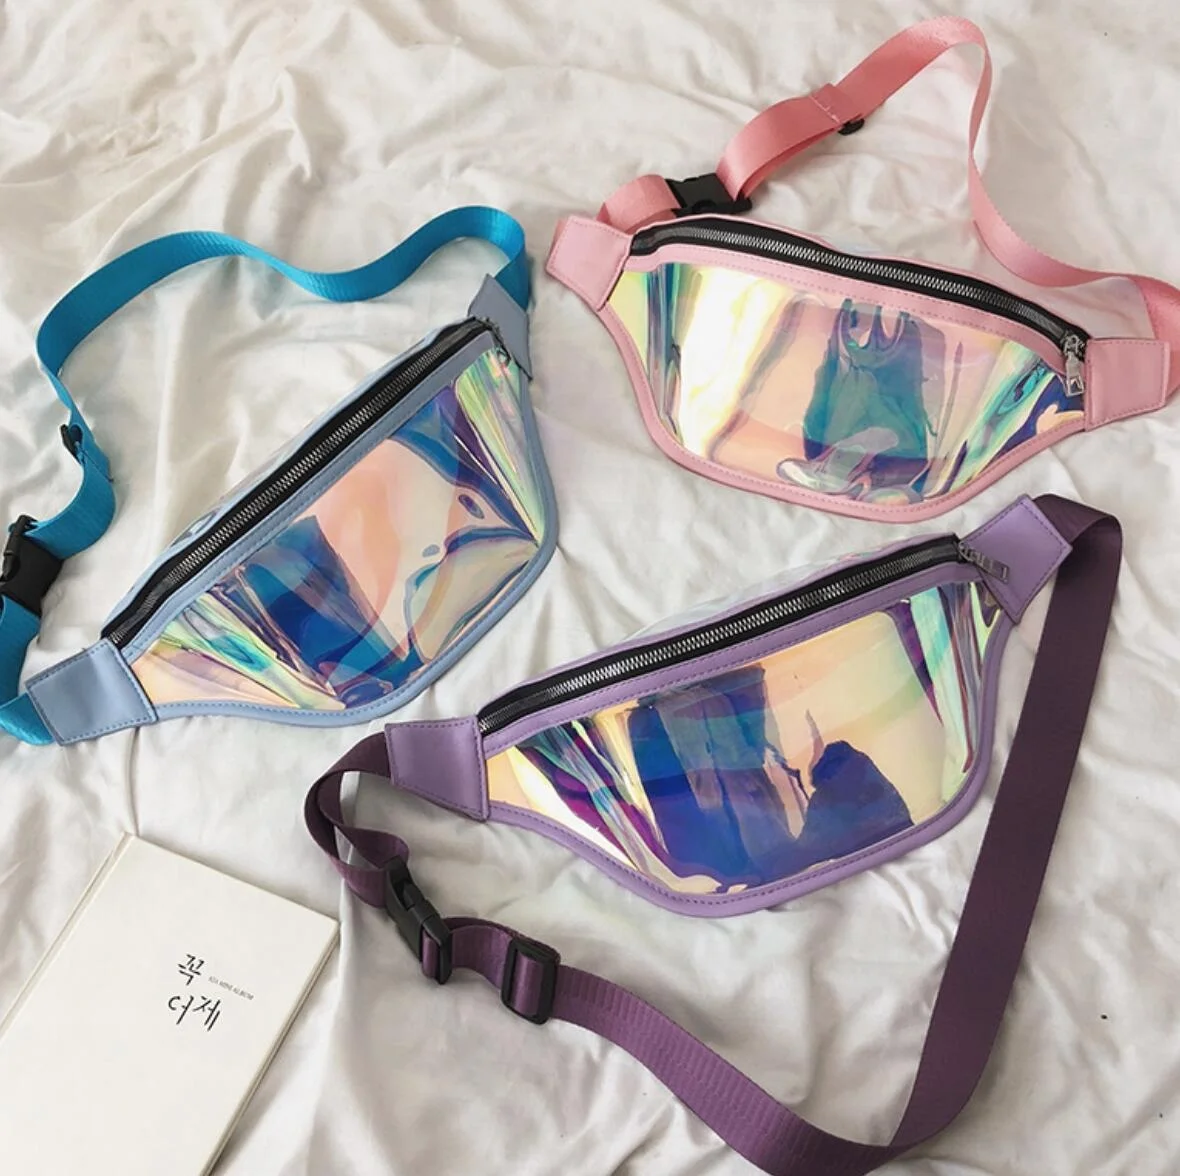 

2021 Wholesale Hot selling Holographic Laser Waist Bag Clear Bum Bag Reflective Transparent PVC Fanny Pack for Women, Picture shown